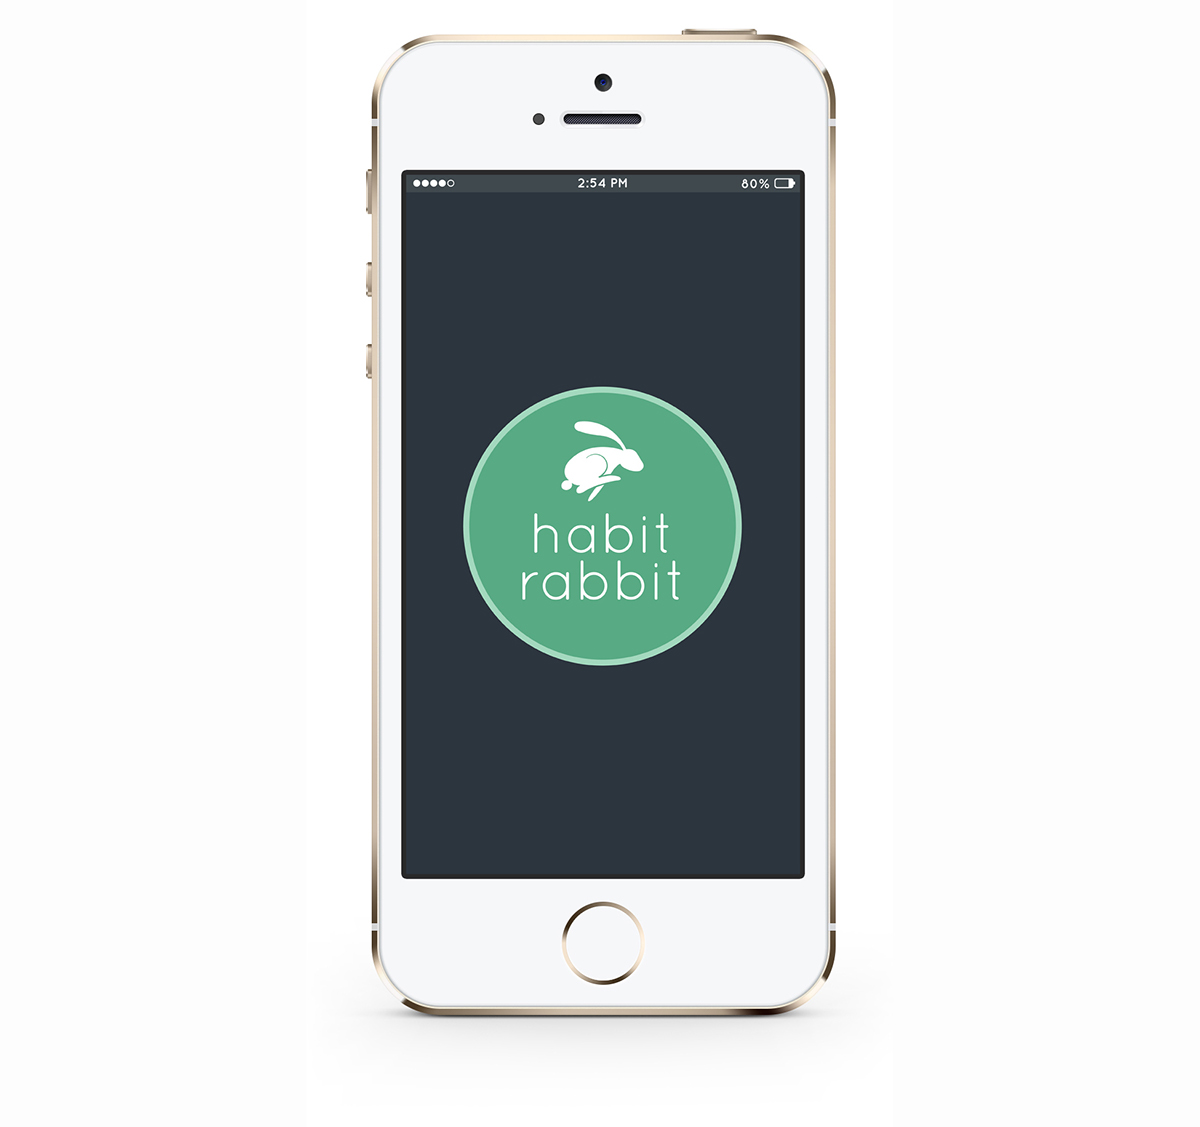 habits rabbits habit rabbit app Productivity ios iphone phone app design Interface interface design Goals community productive